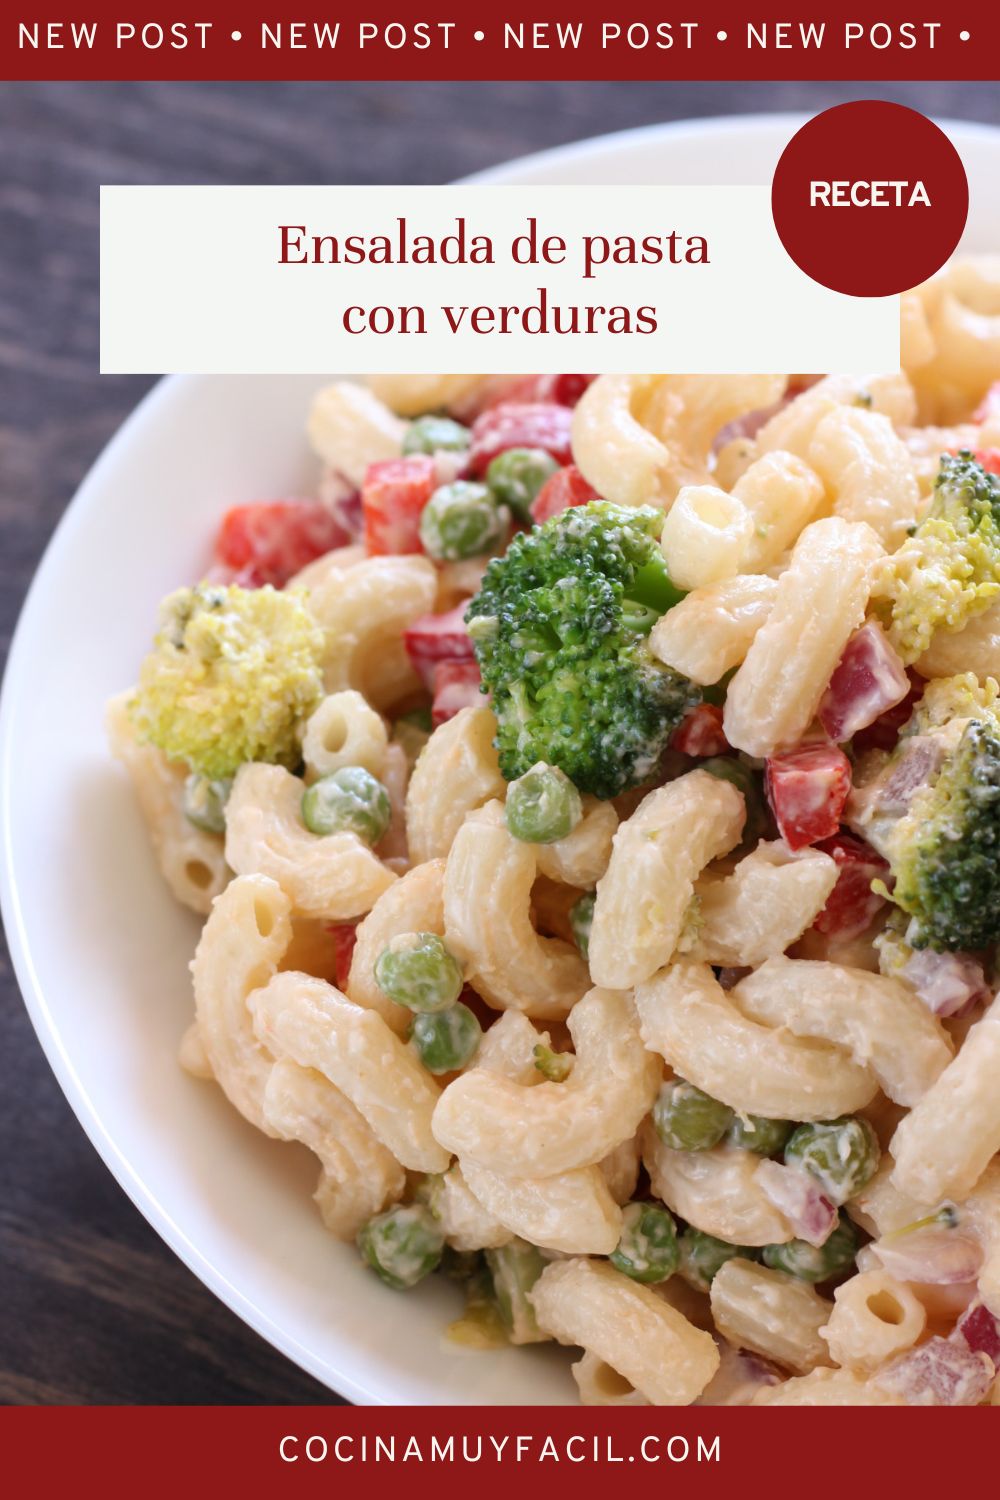 Ensalada de pasta con verduras | cocinamuyfacil.com